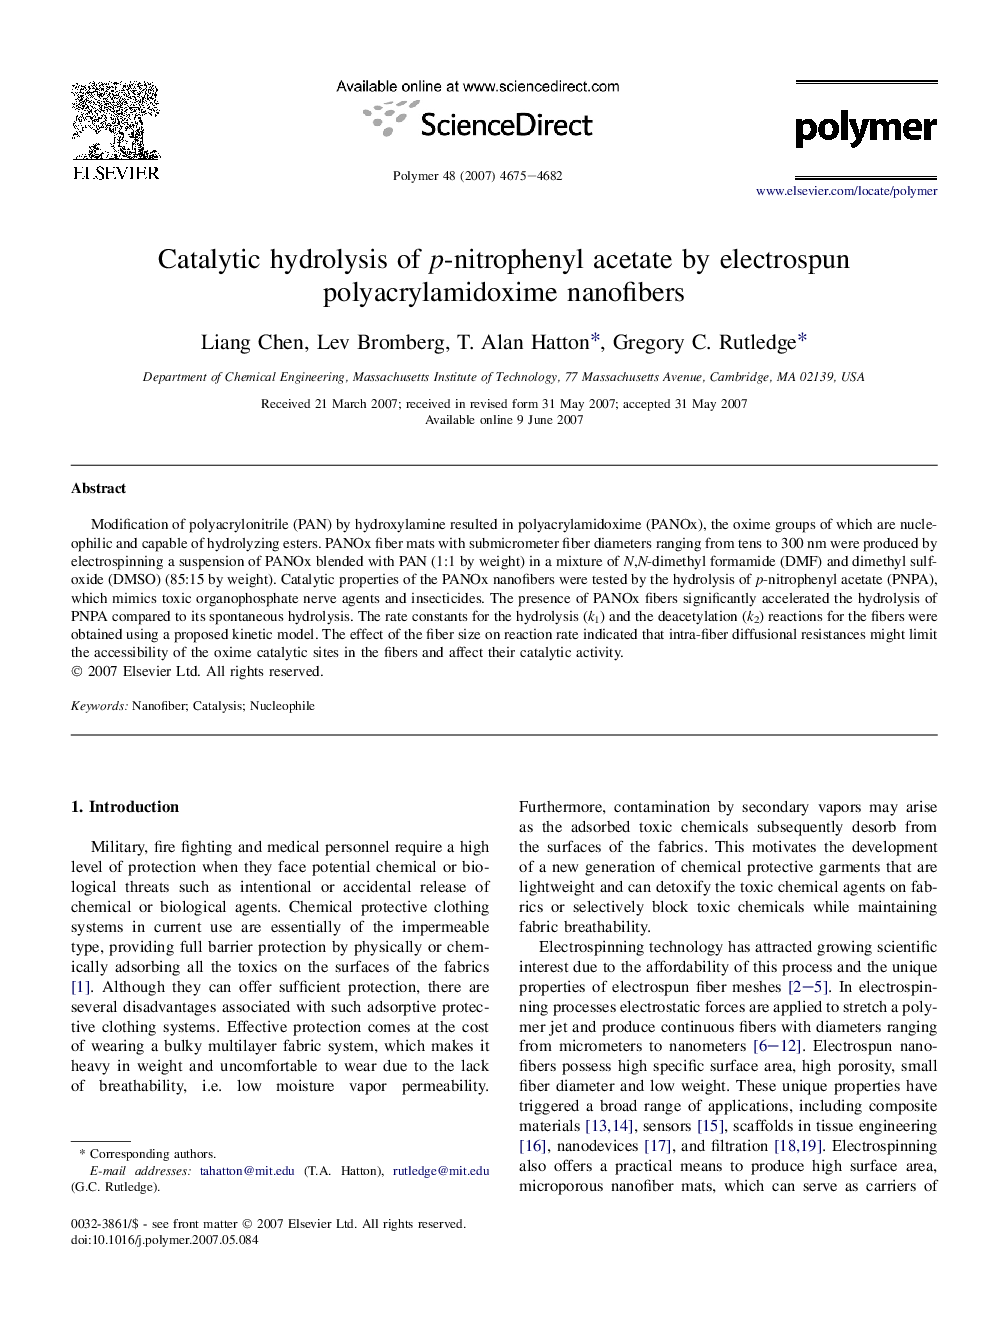 Catalytic hydrolysis of p-nitrophenyl acetate by electrospun polyacrylamidoxime nanofibers